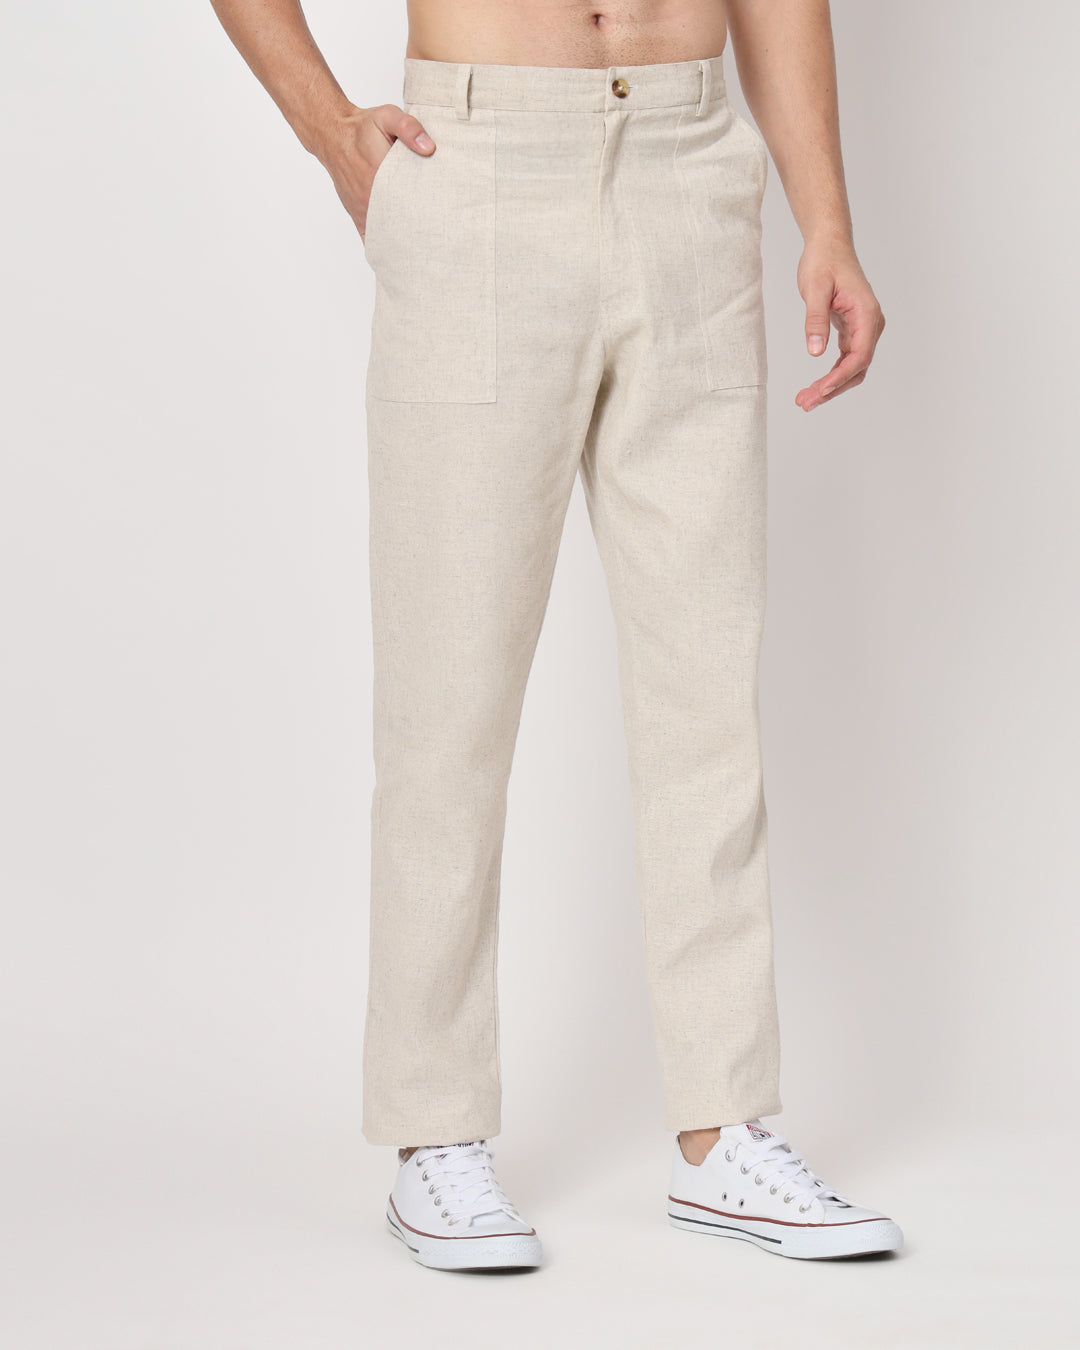 Combo : Comfy Ease Beige & White Men's Pants - Set of 2